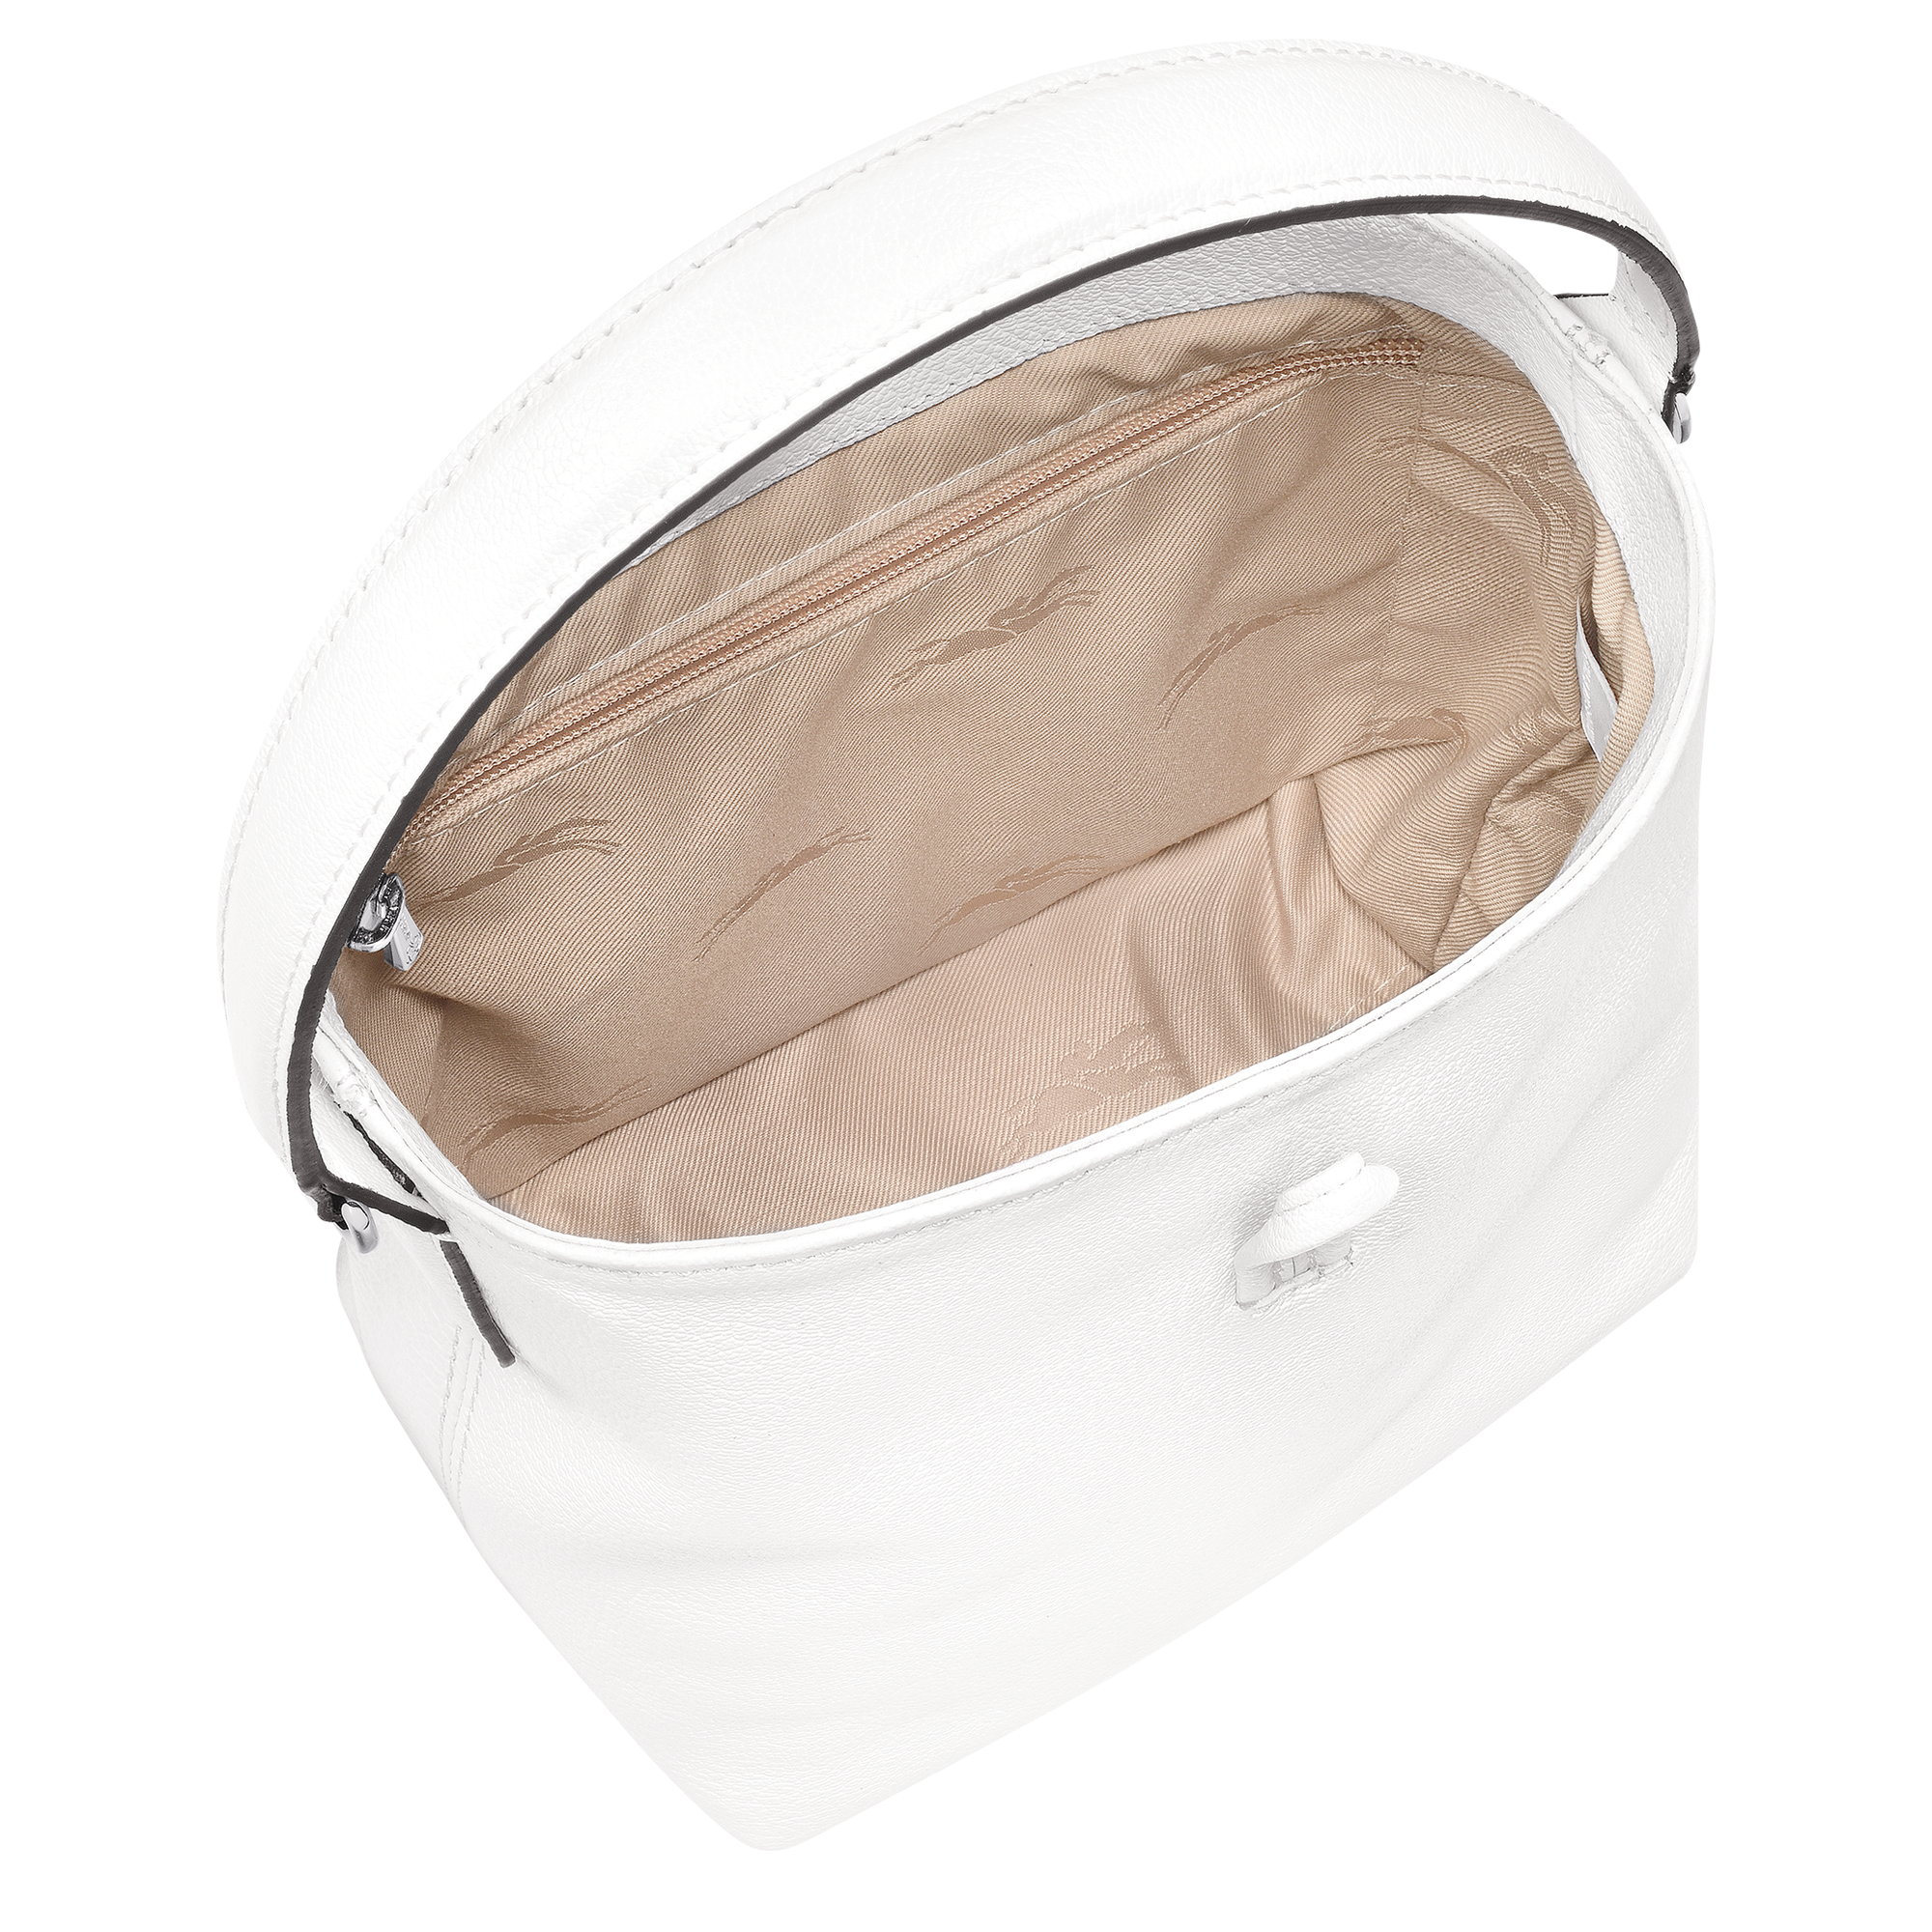 Roseau Bucket bag XS, White